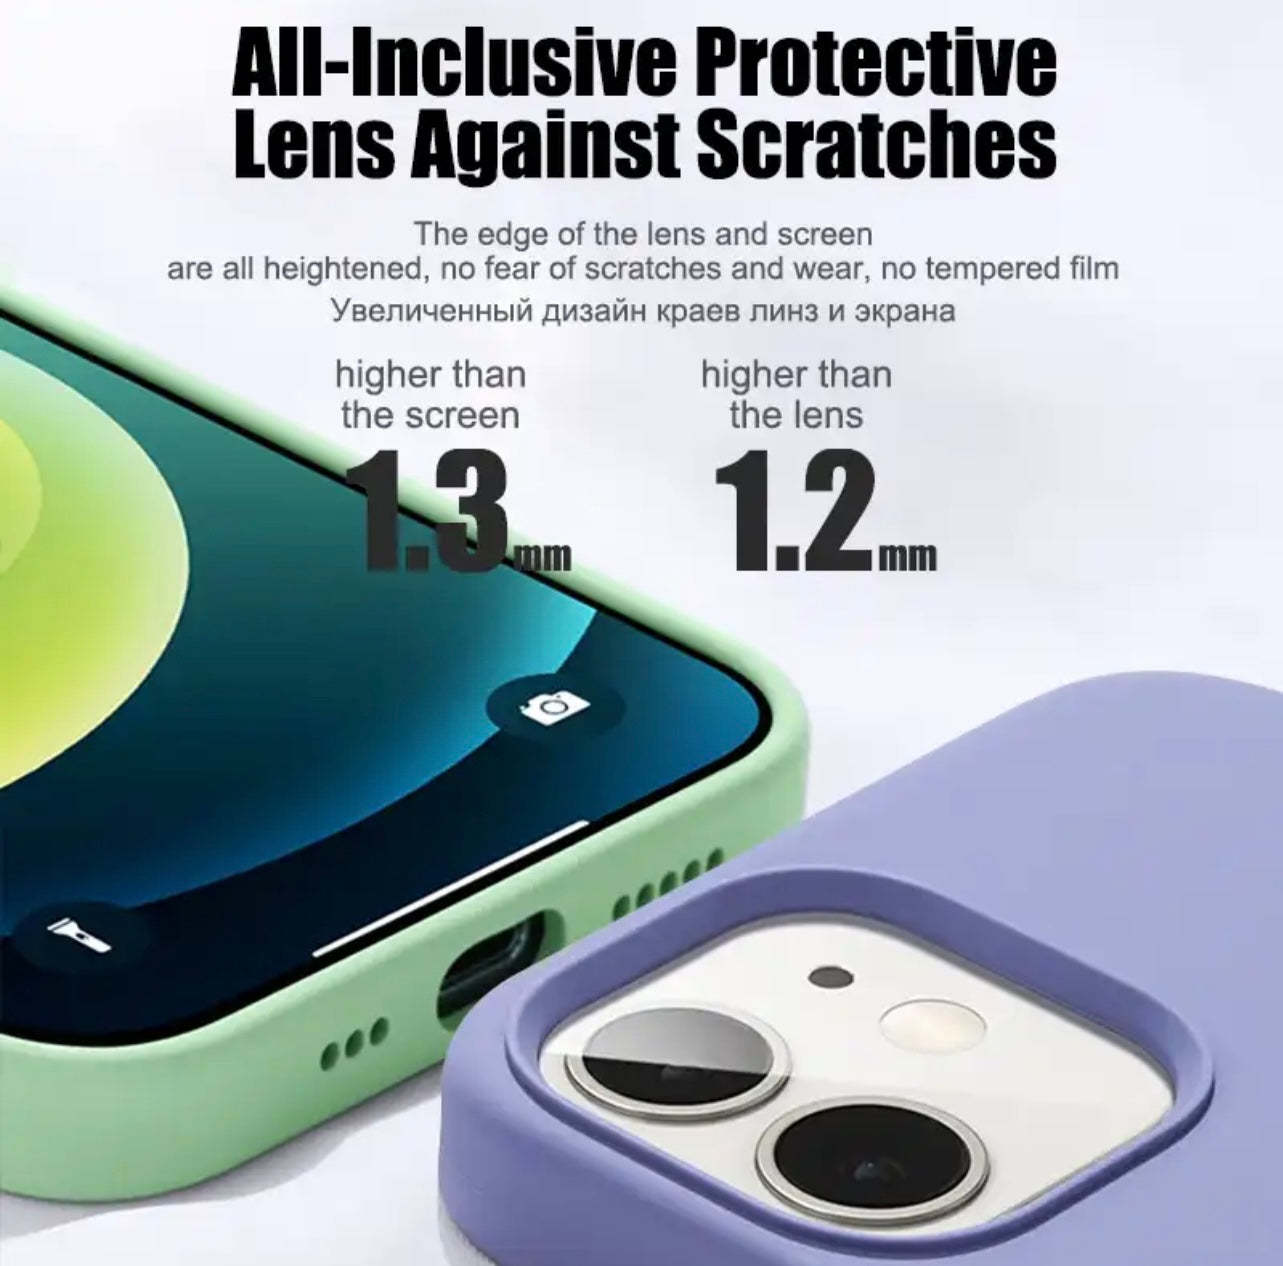 Protective case light blue